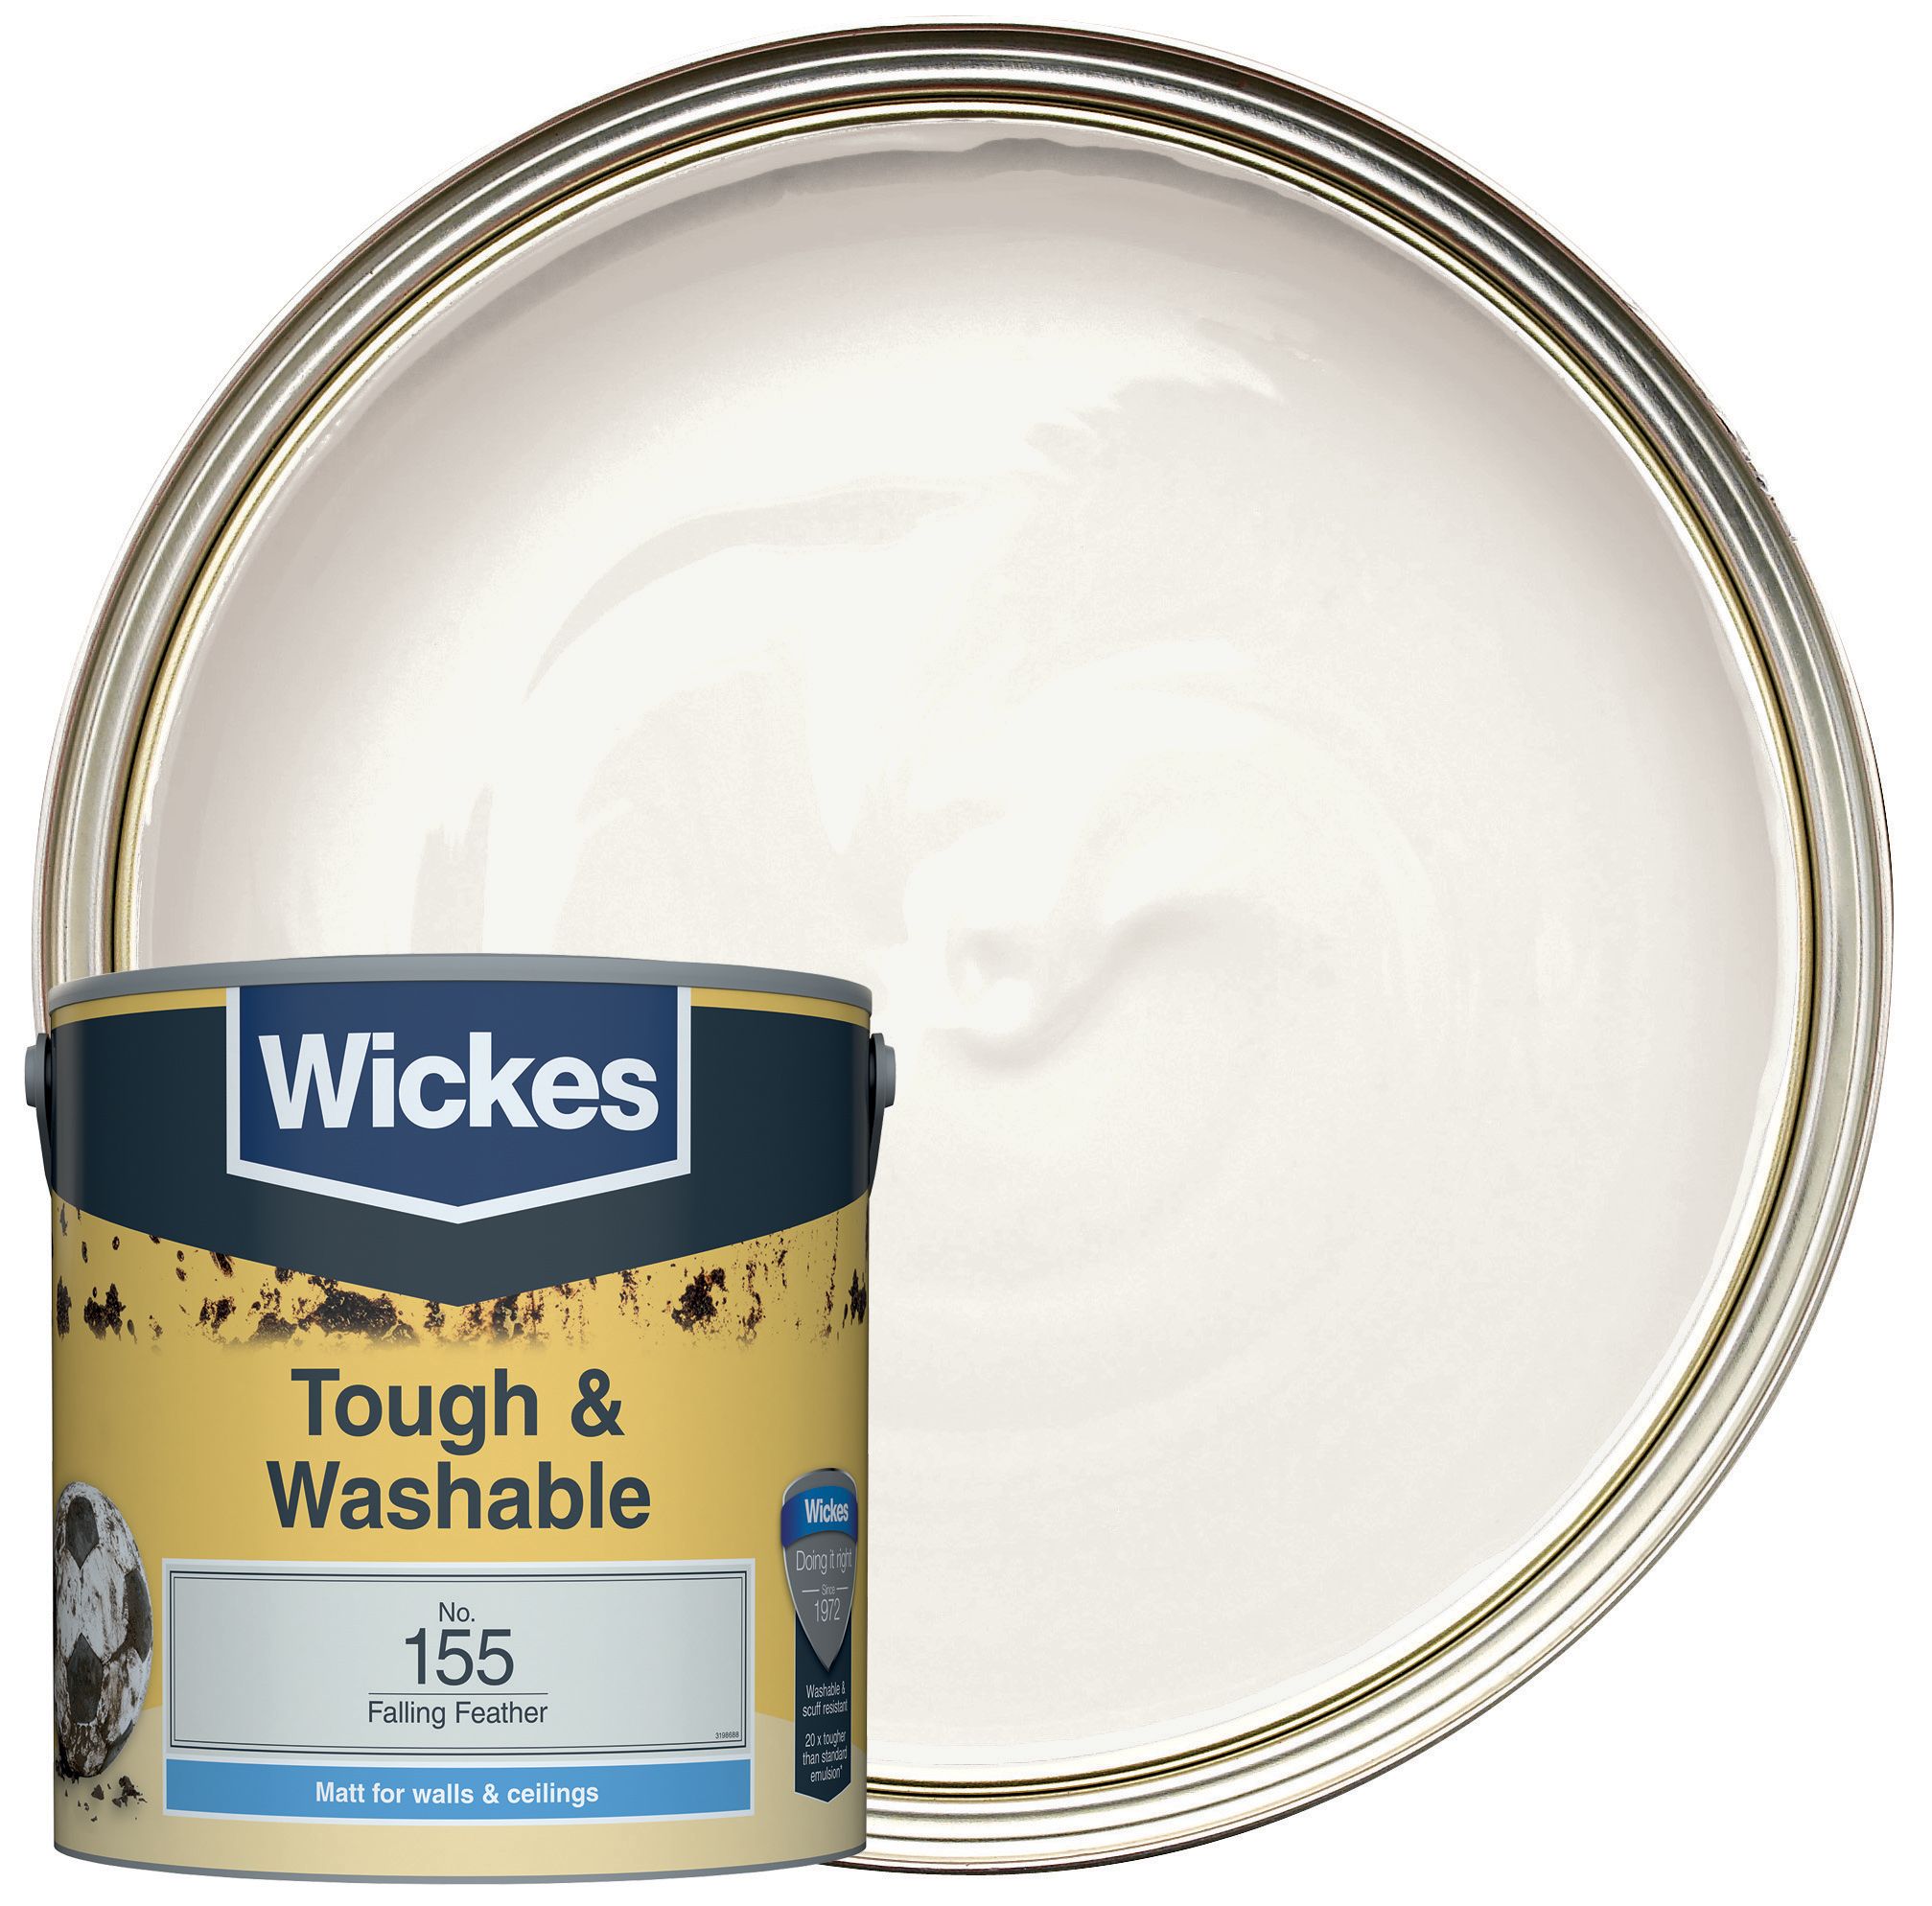 Wickes Tough & Washable Matt Emulsion Paint - Falling Feather No.155 - 2.5L